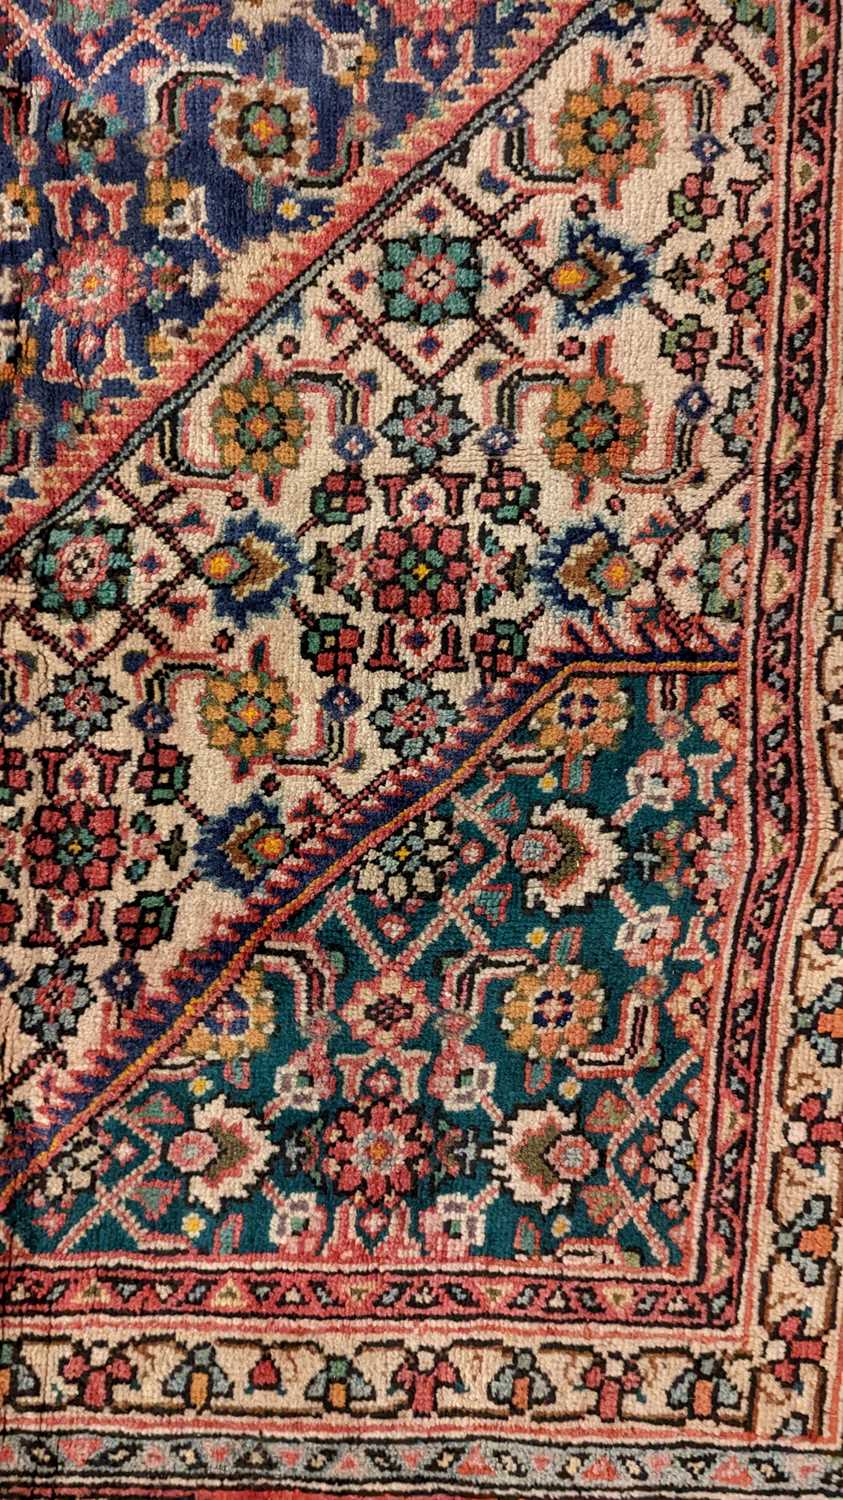 A Tabriz carpet - Image 19 of 21